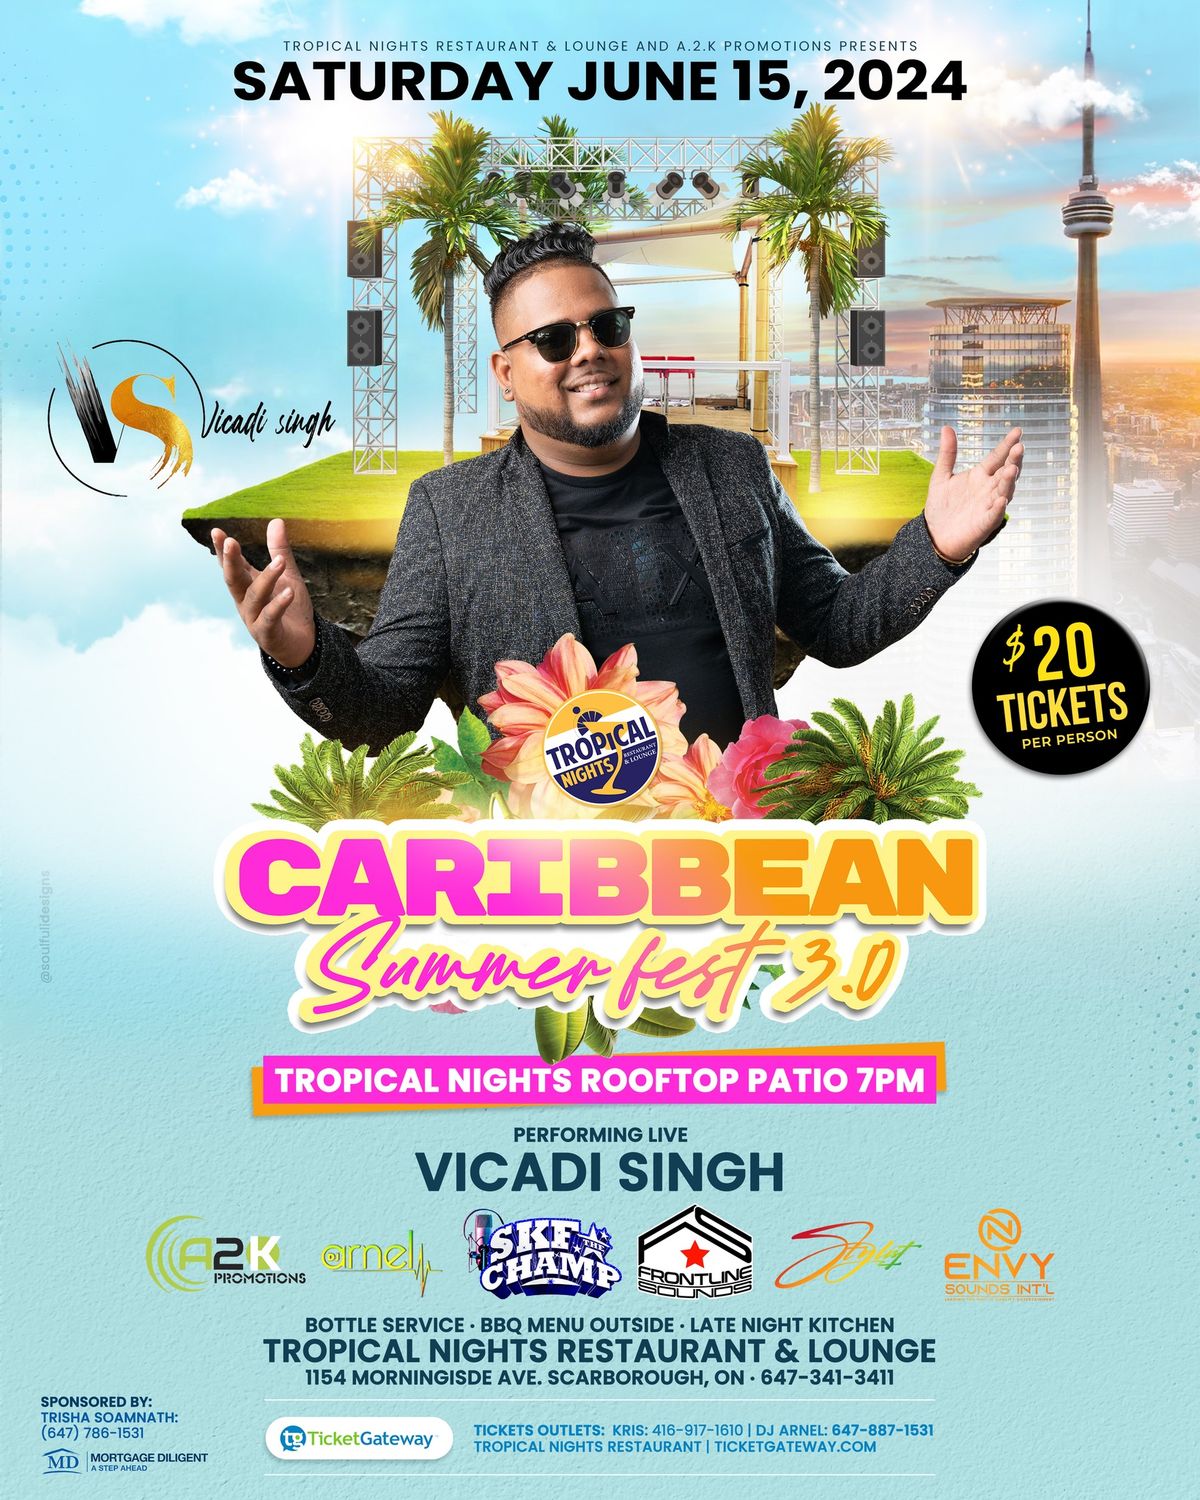 Vicadi Singh - Caribbean Summerfest 3.0